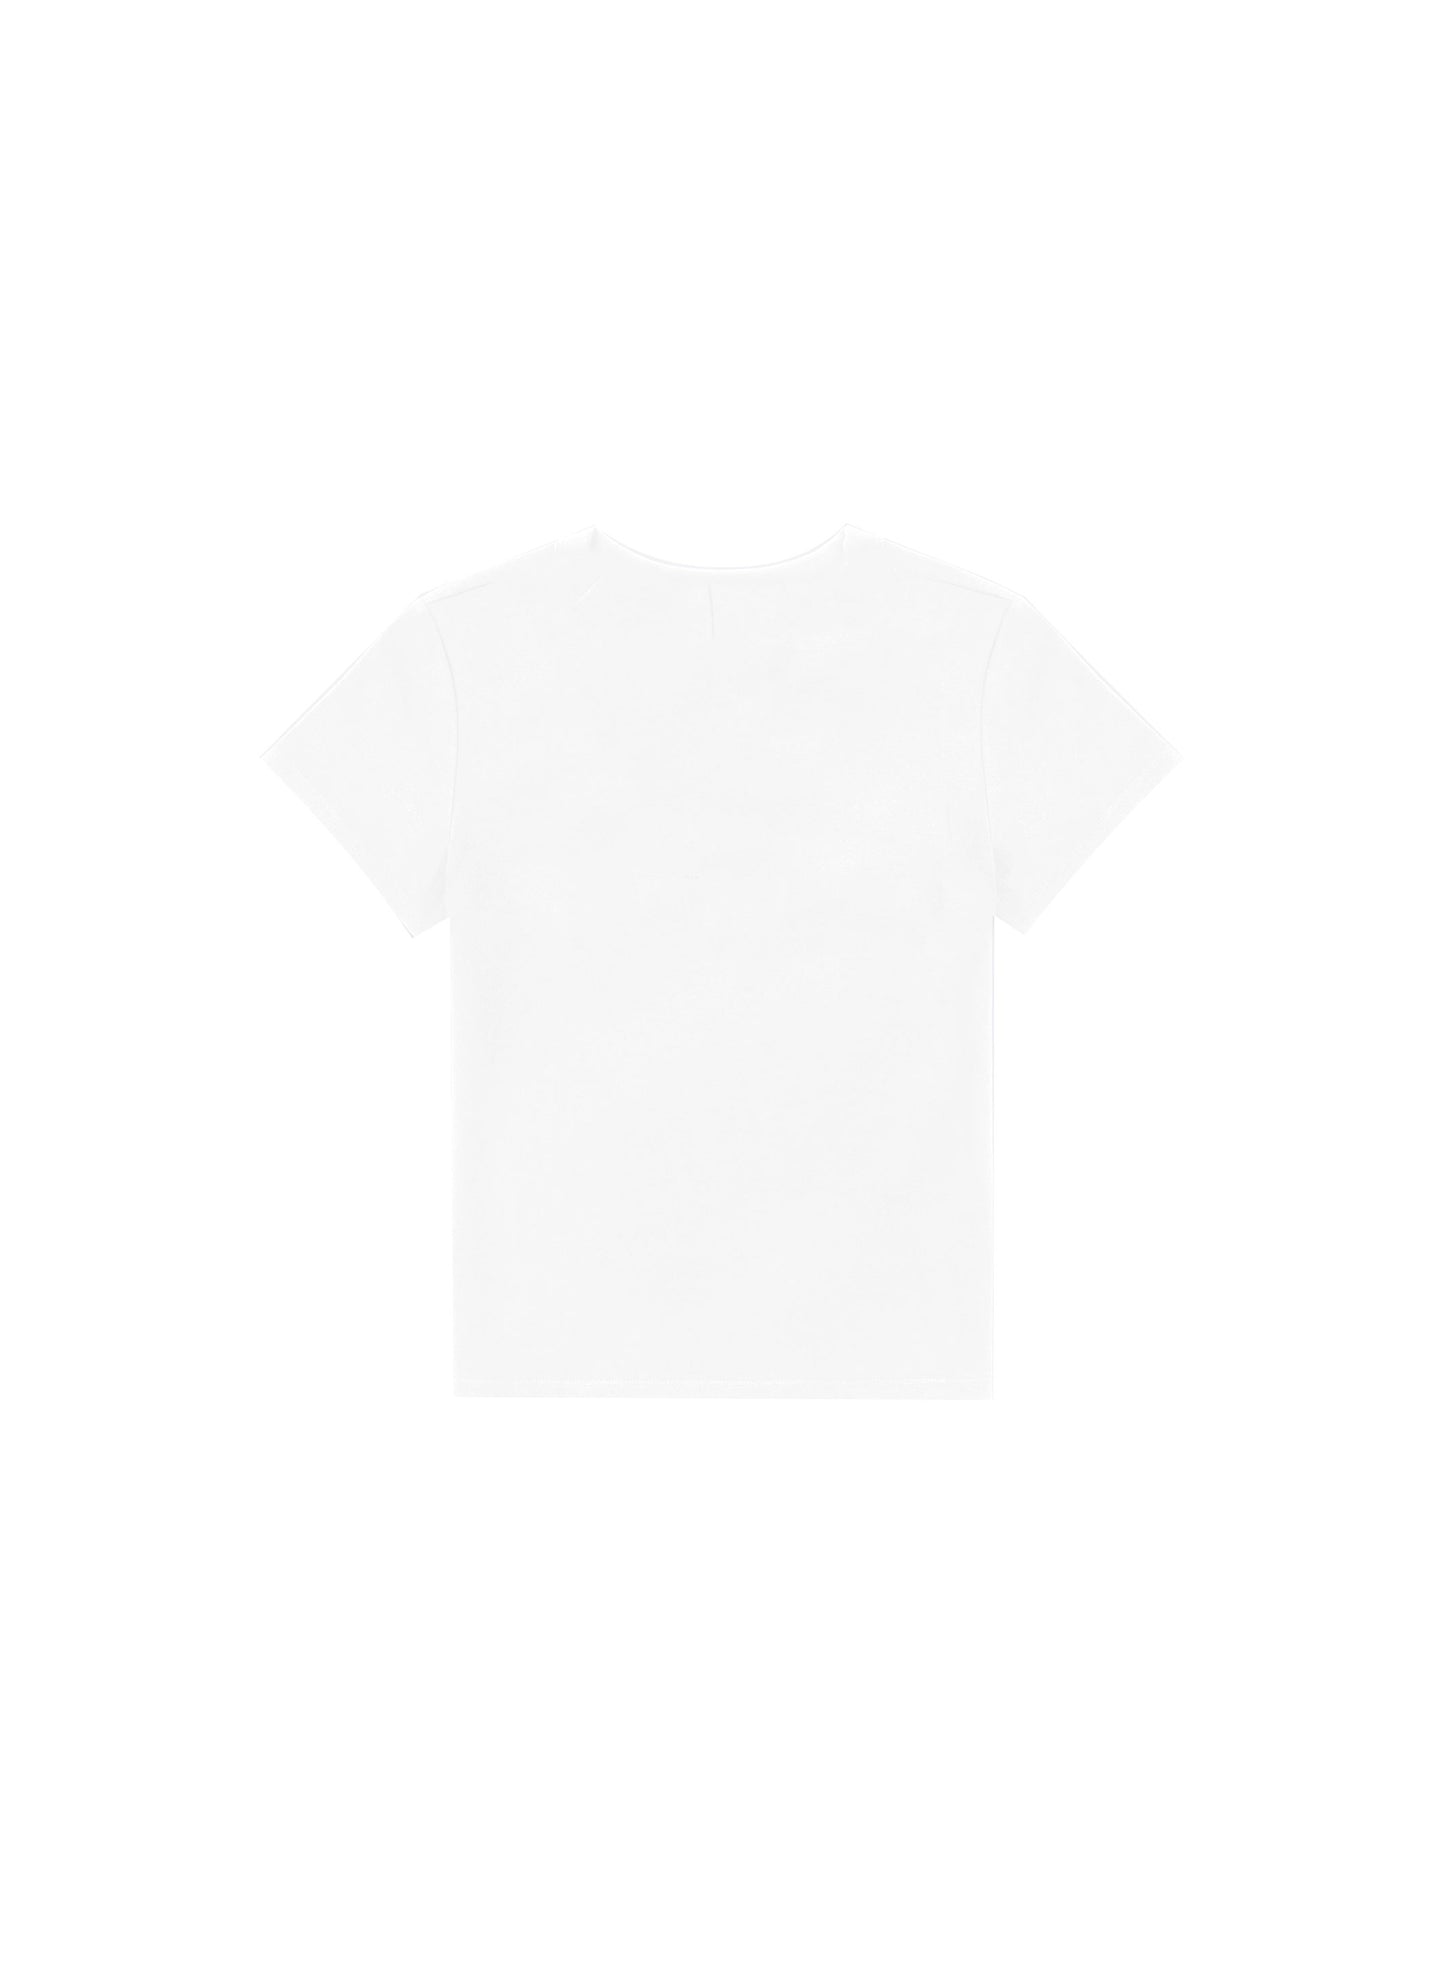 Taglioni Logo T-shirt in White